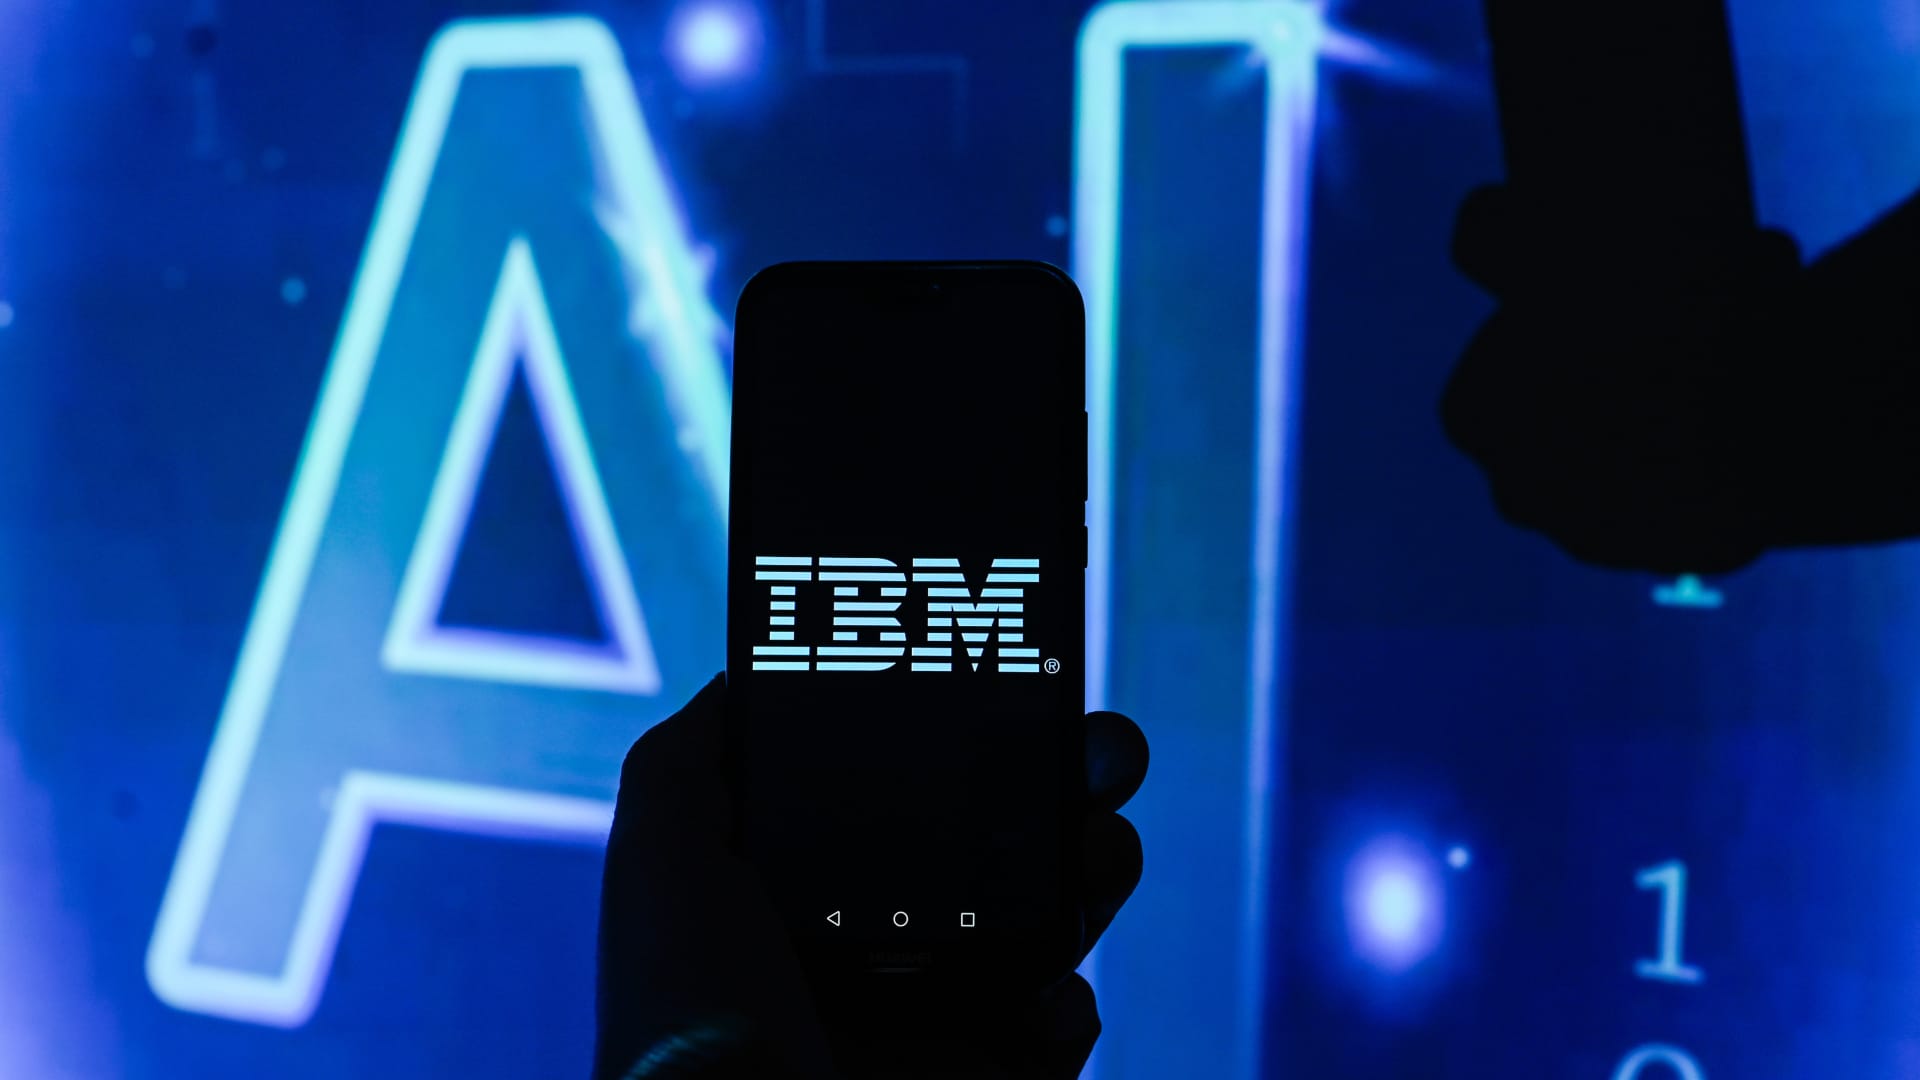 IBM is slashing jobs in marketing and communications